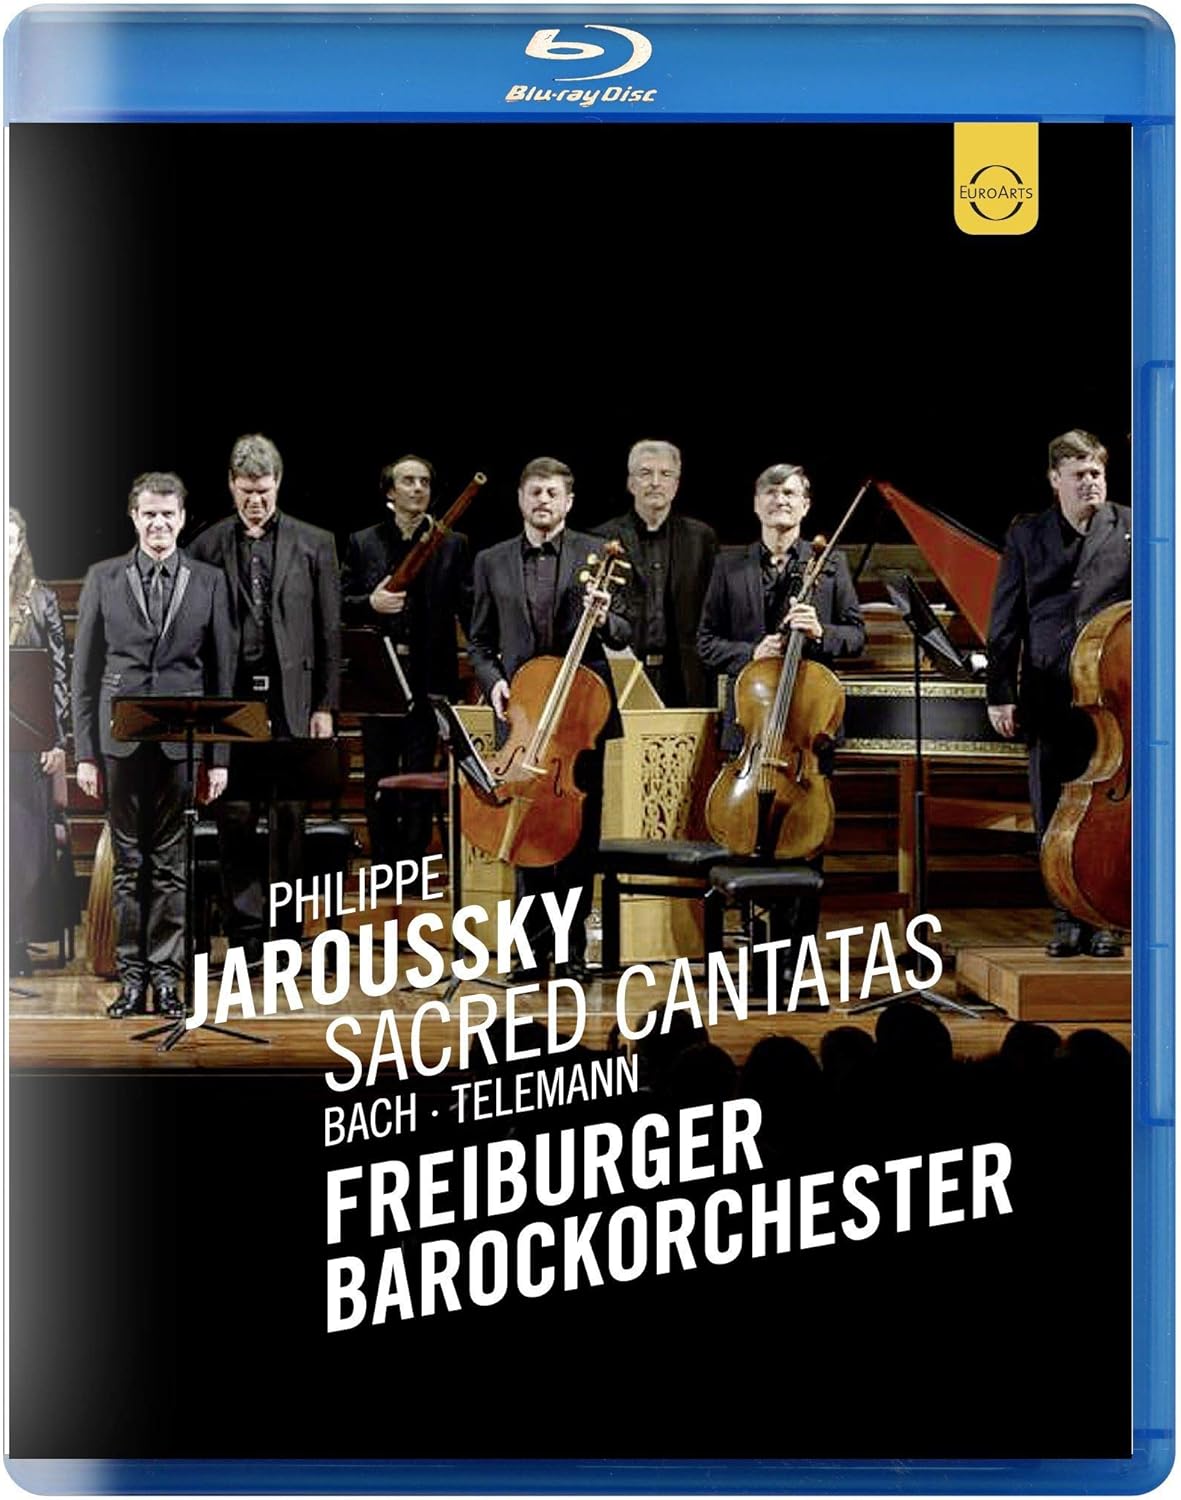 Bach & Telemann: Sacred Cantatas (Blu-ray Disc) - Philippe Jaroussky ...